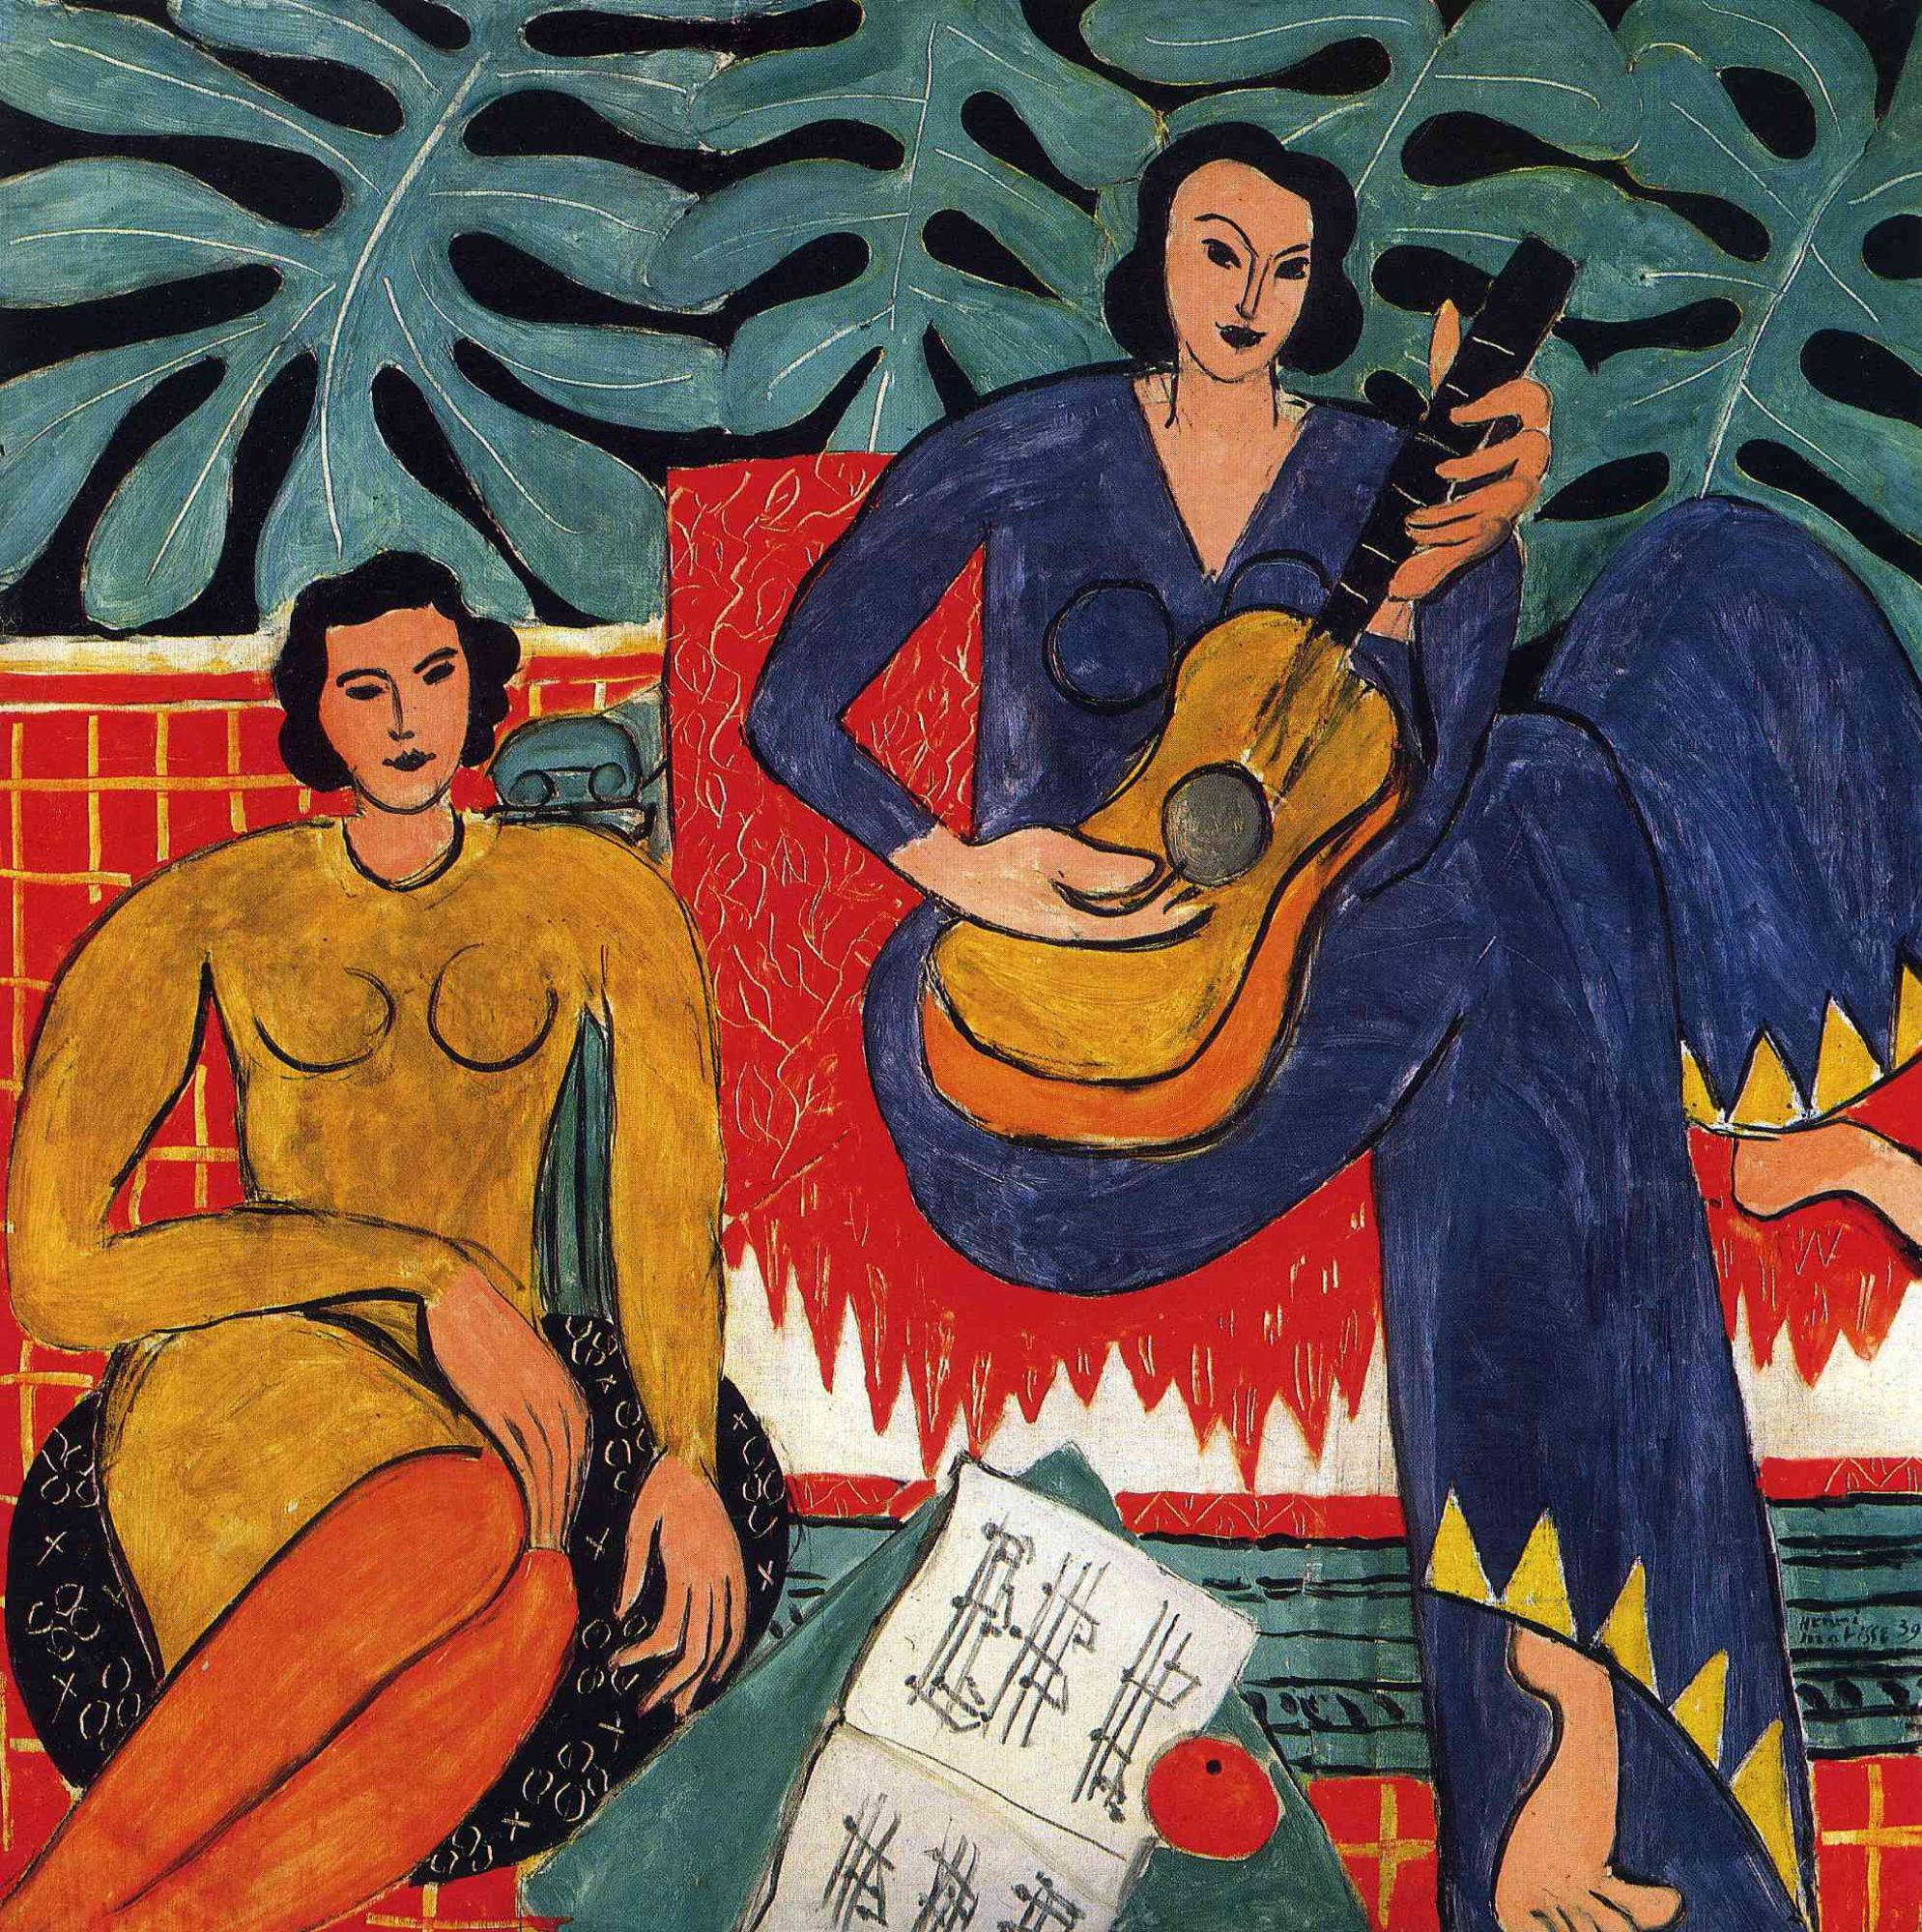 Henri Matisse: Quem Foi O Artista, Obras E Características